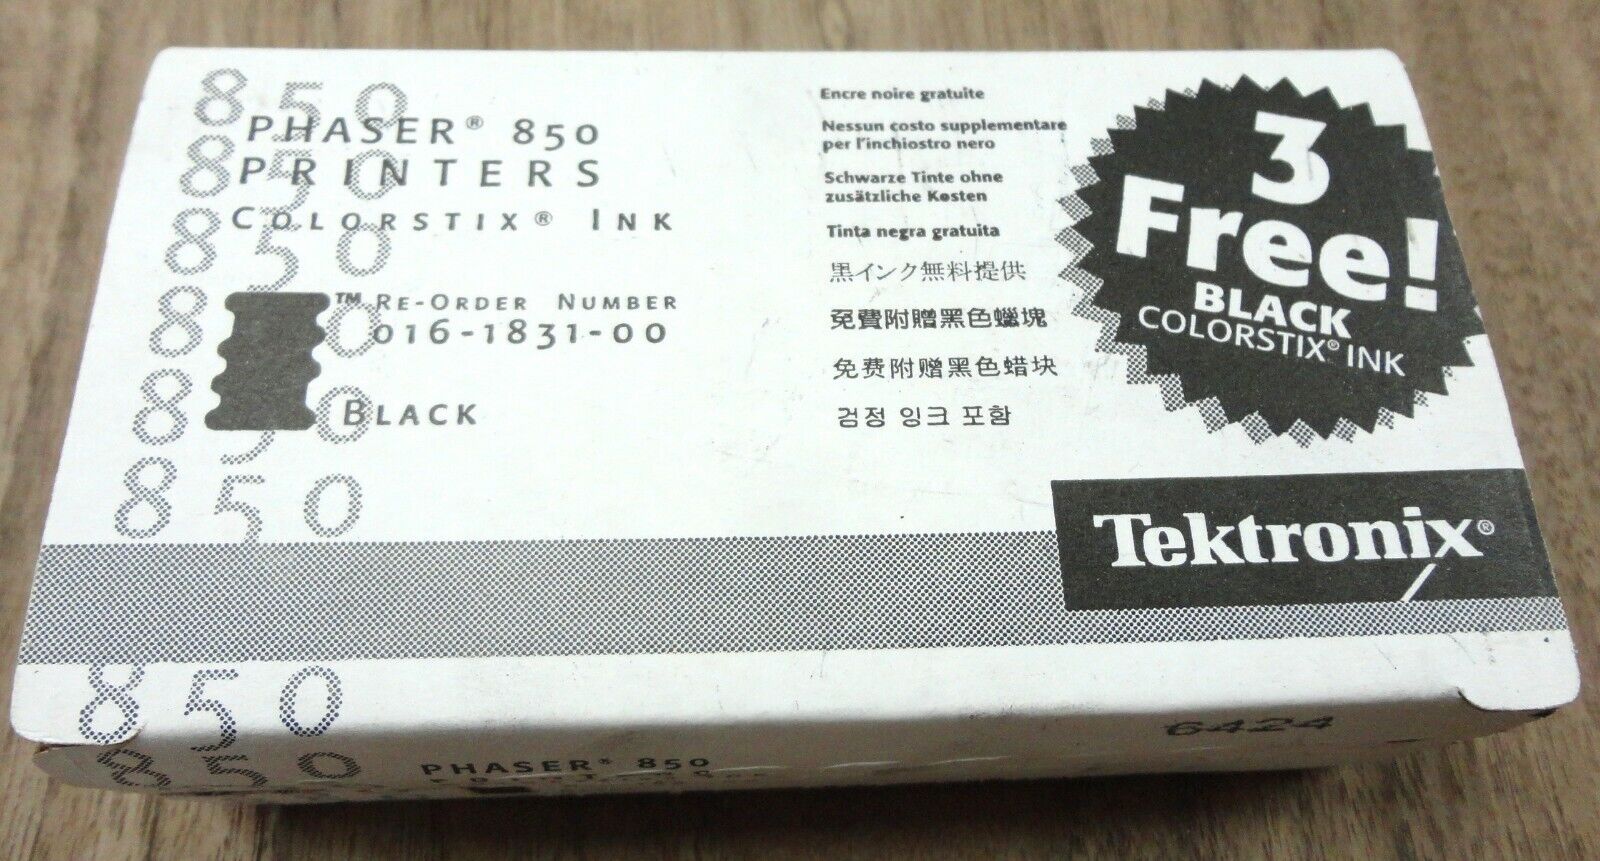 Tektronix Phaser 850 Colorstix Ink Black - S package of 3 cartridges new